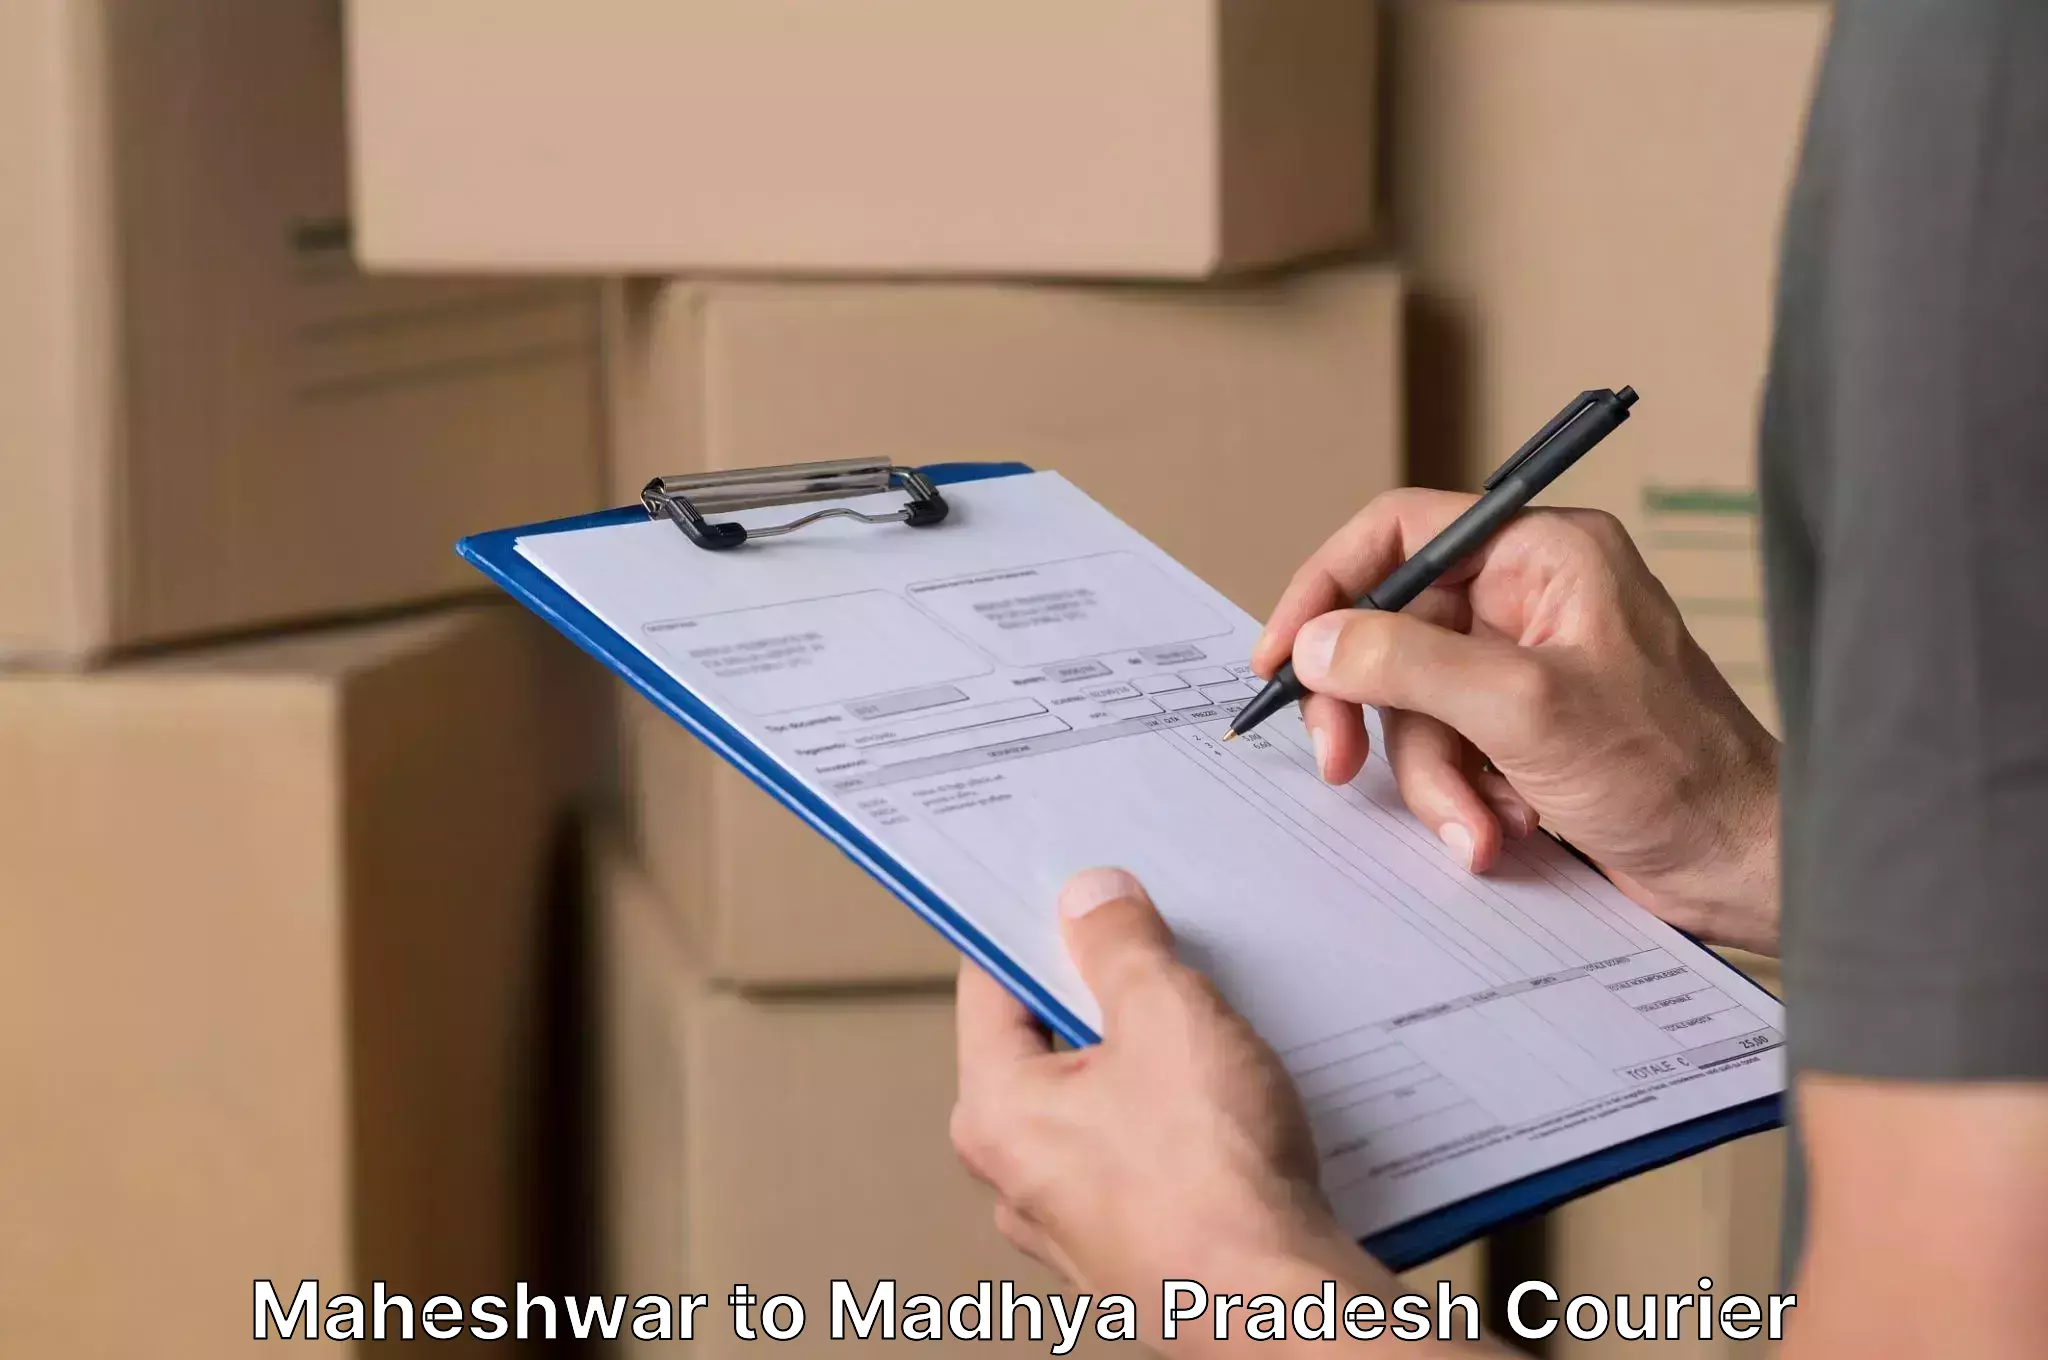 Quality relocation assistance Maheshwar to Vidisha